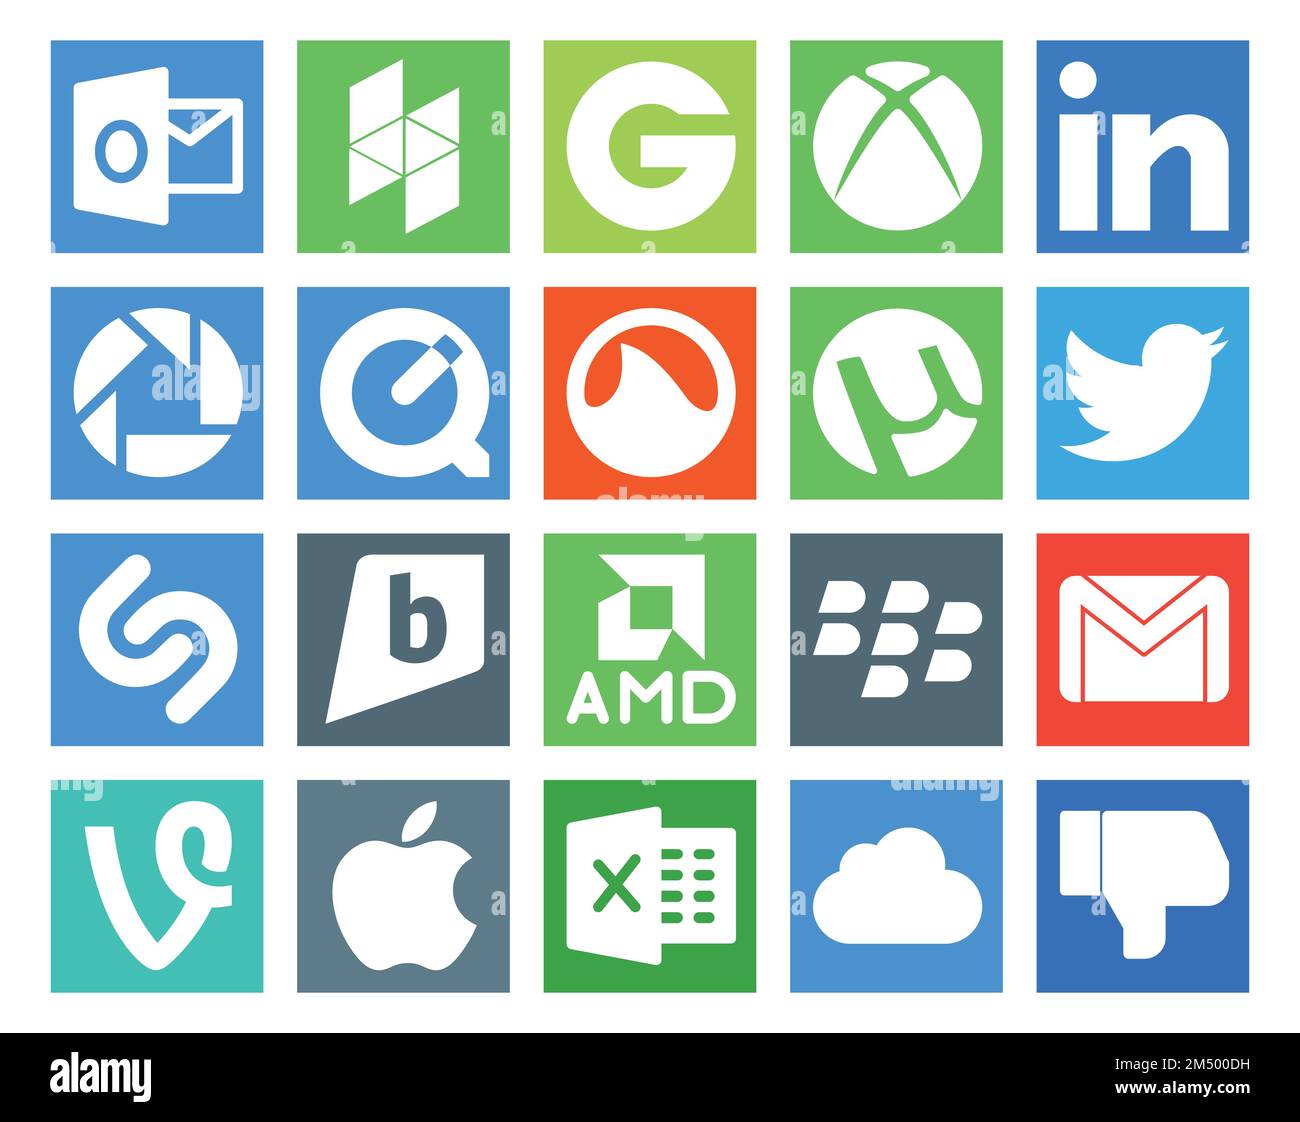 20 Social Media Icon Pack Including mail. gmail. utorrent. blackberry. brightkite Stock Vector